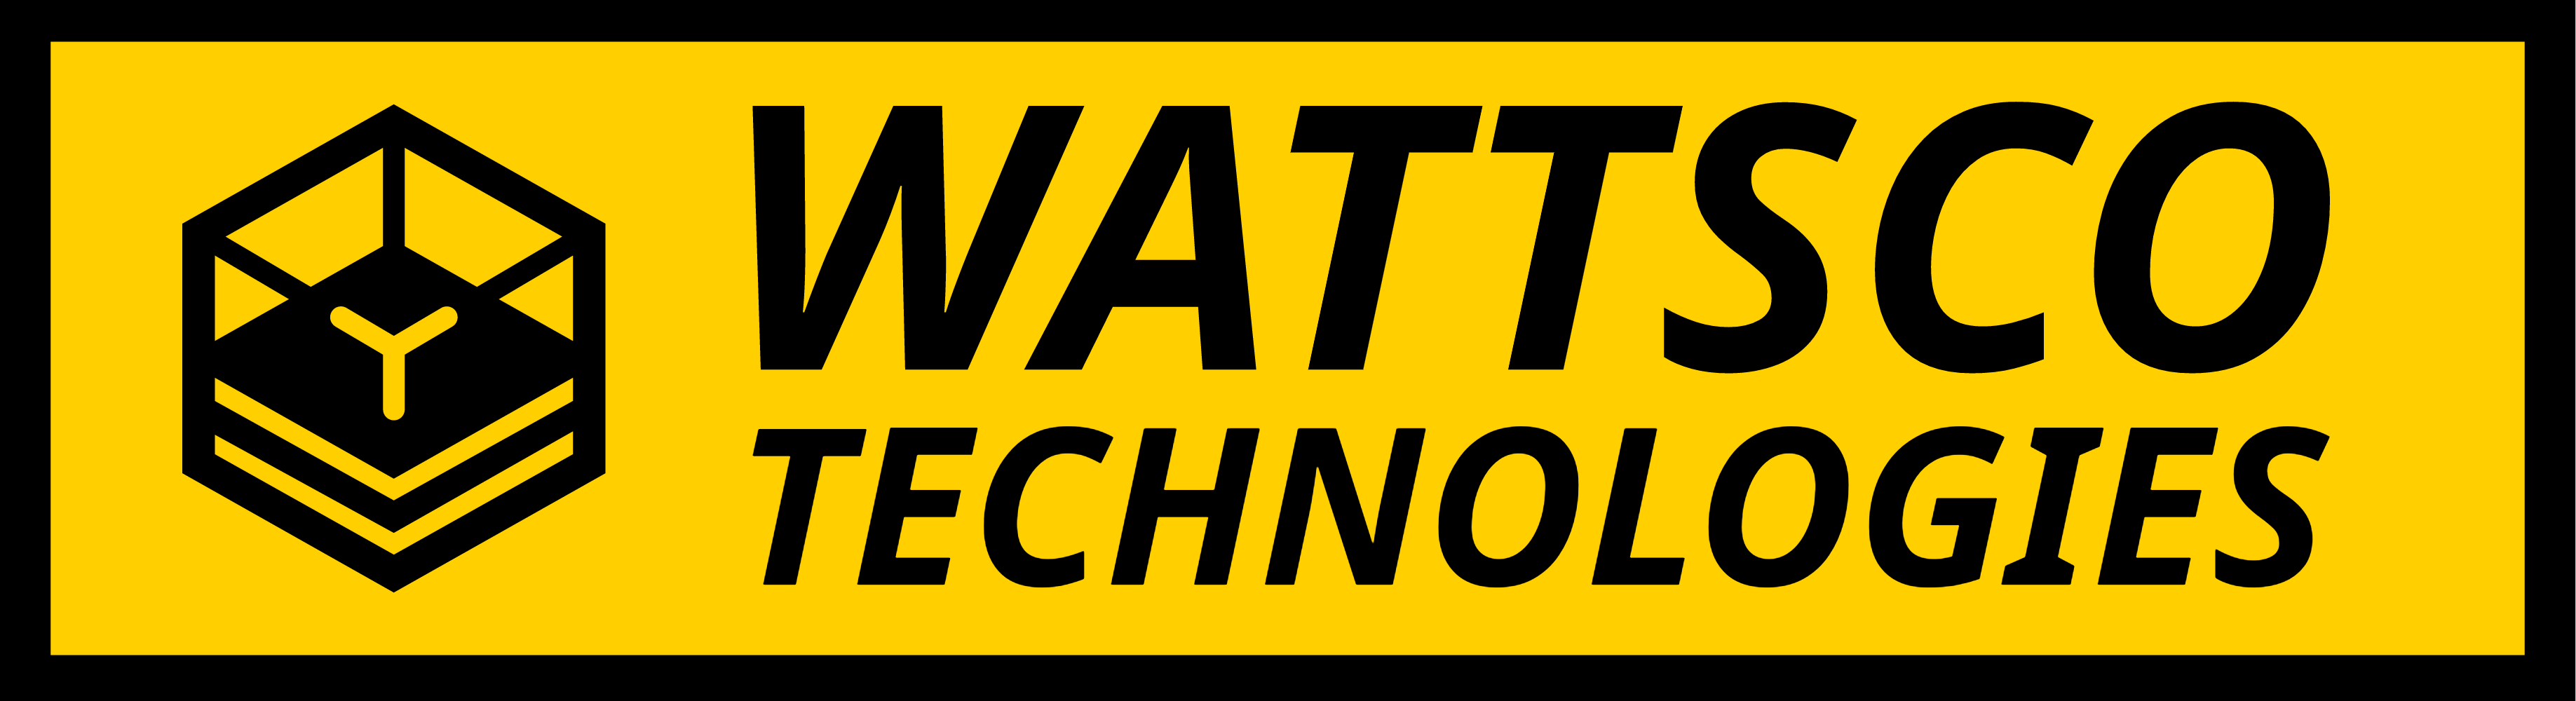 WattsCo Technologies Logo